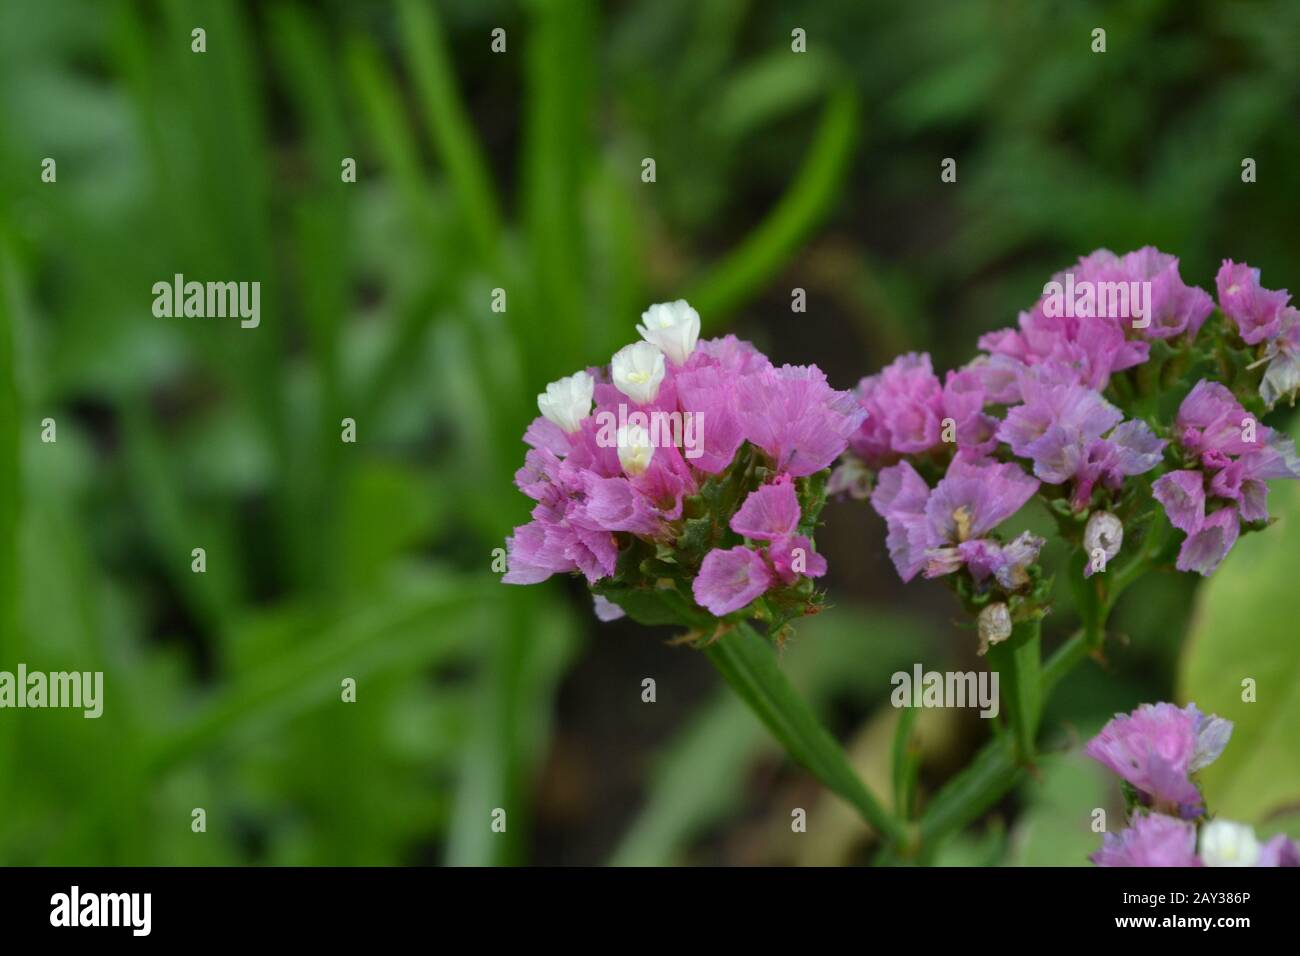 Getrocknete Blumen. Limonium sinuatum. Statice sinuata. Blume violett. Nahaufnahme. Garten. Blumenbeet. Wachsende Blumen. Horizontal Stockfoto